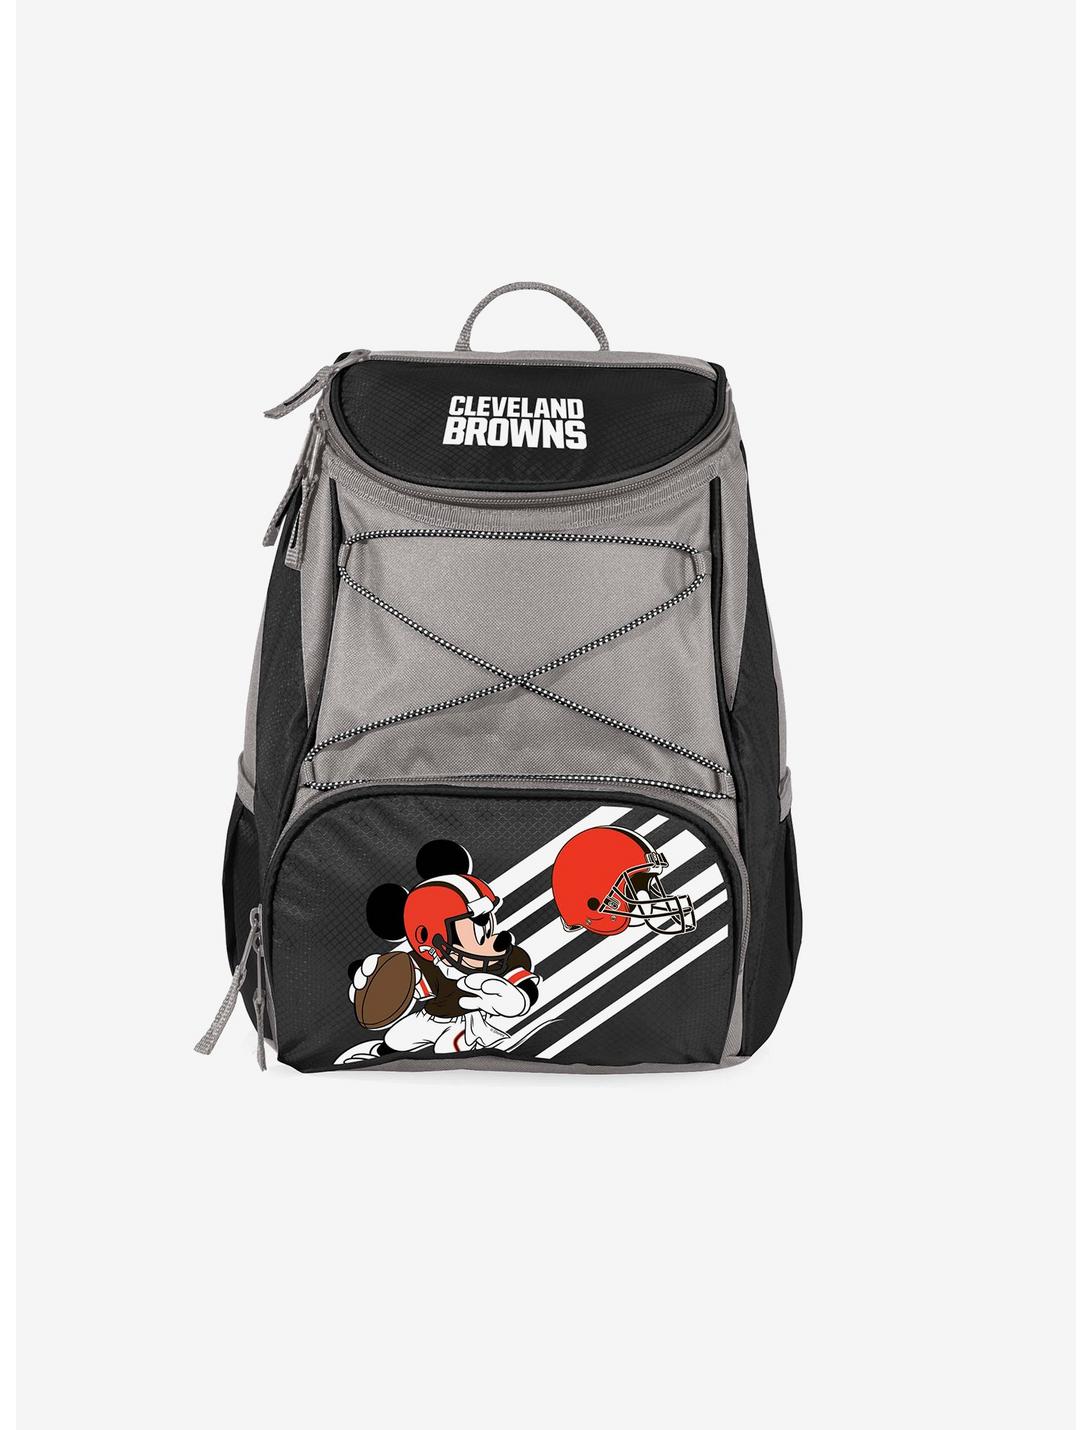 Disney Mickey Mouse NFL Cleveland Browns Cooler Backpack, , hi-res